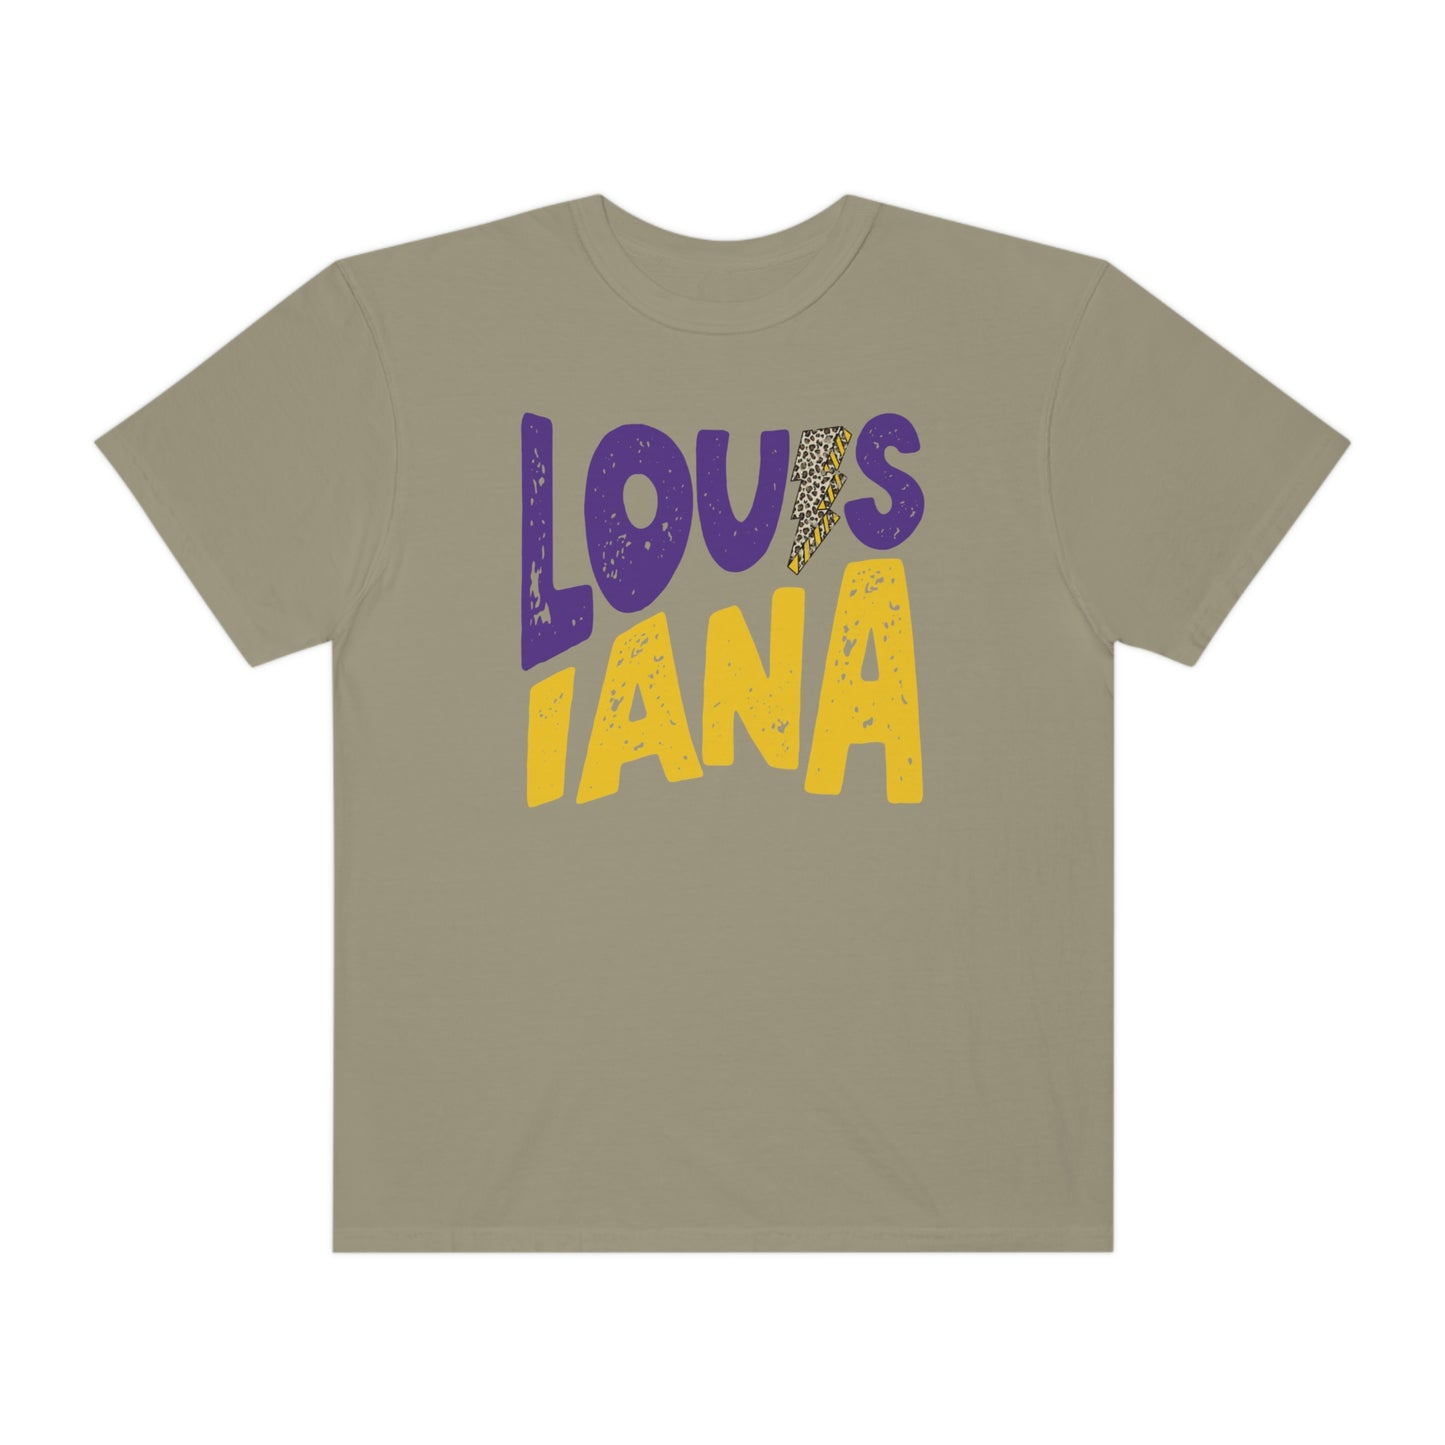 Louisiana Lightning Bolt Shirt